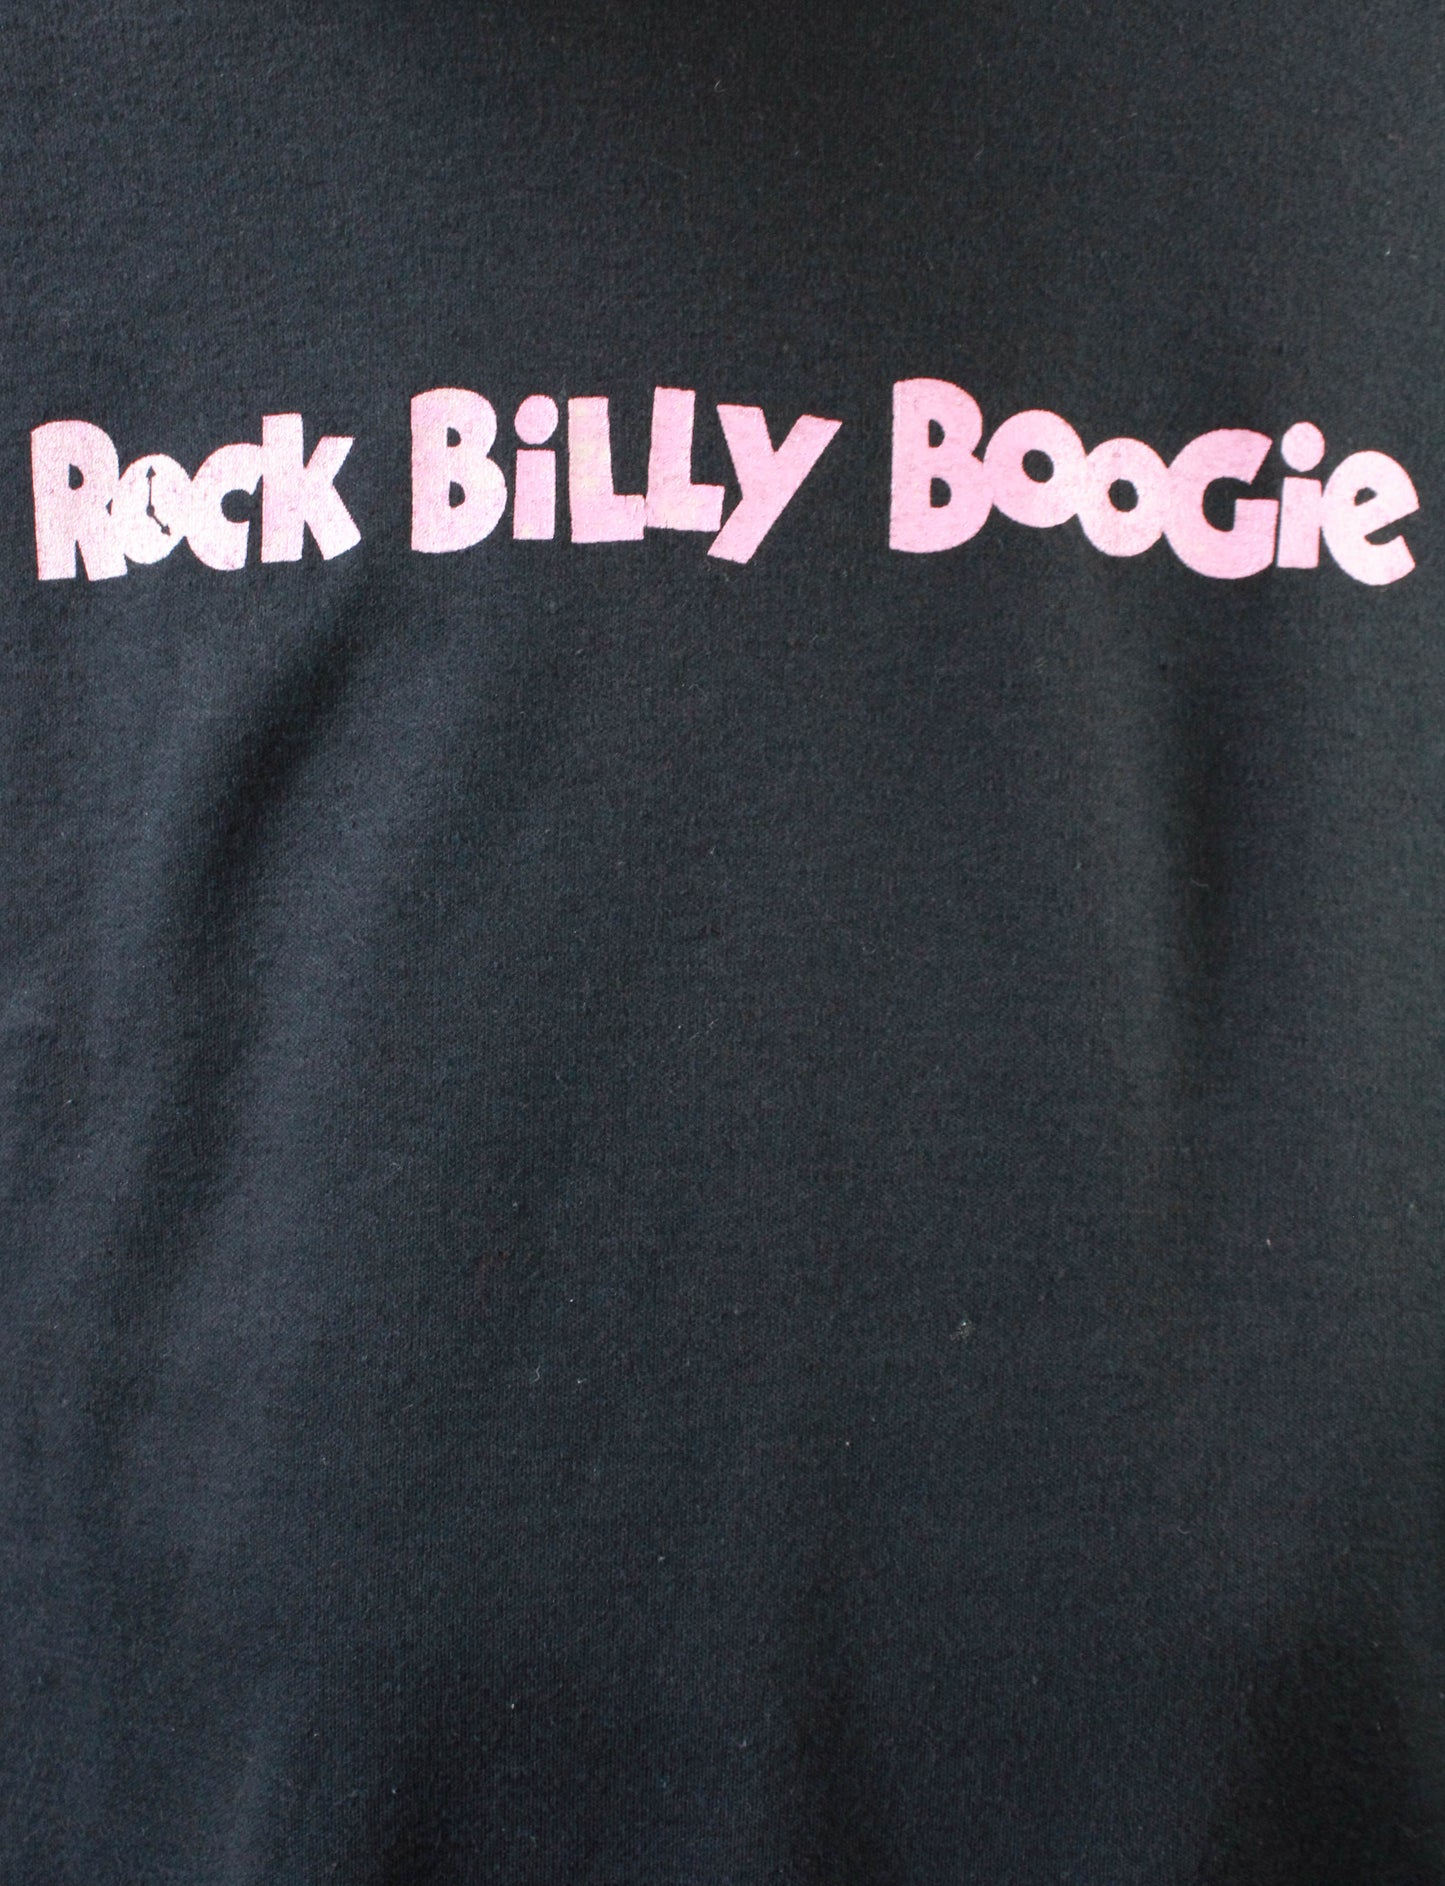 Vintage Robert Gordon Promo T Shirt 1982 Rock Billy Boogie Size Small 